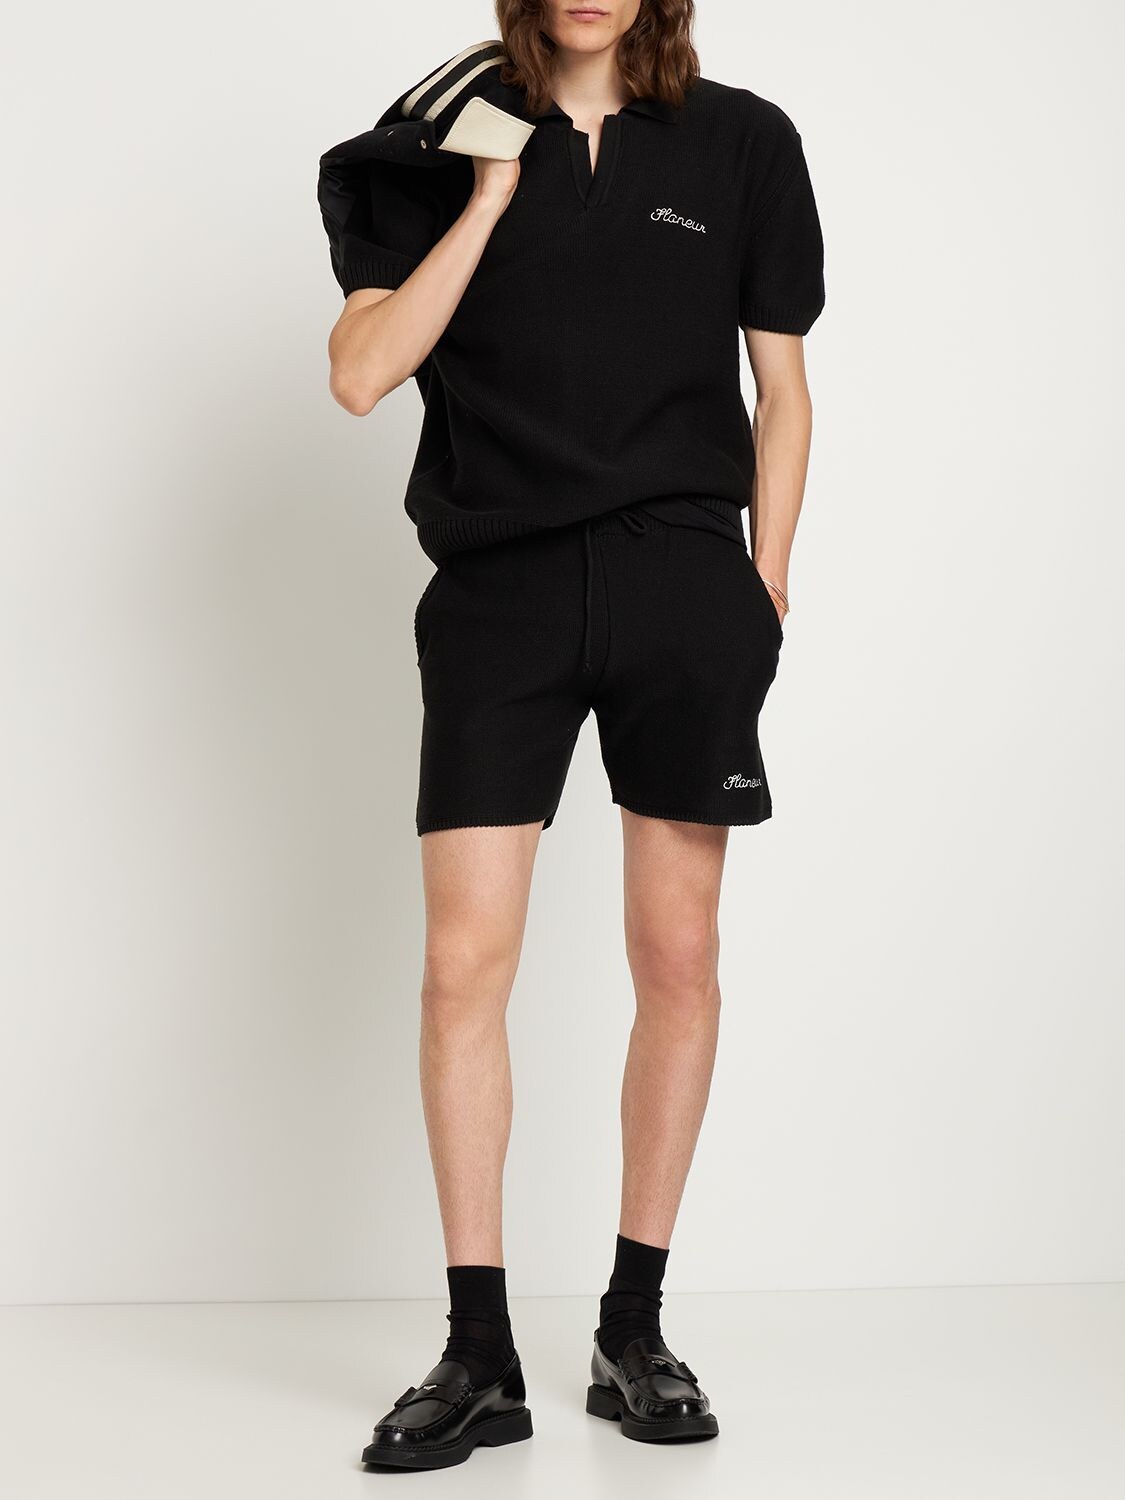 FLANEUR HOMME Cards Shorts in Black – FLÂNEUR